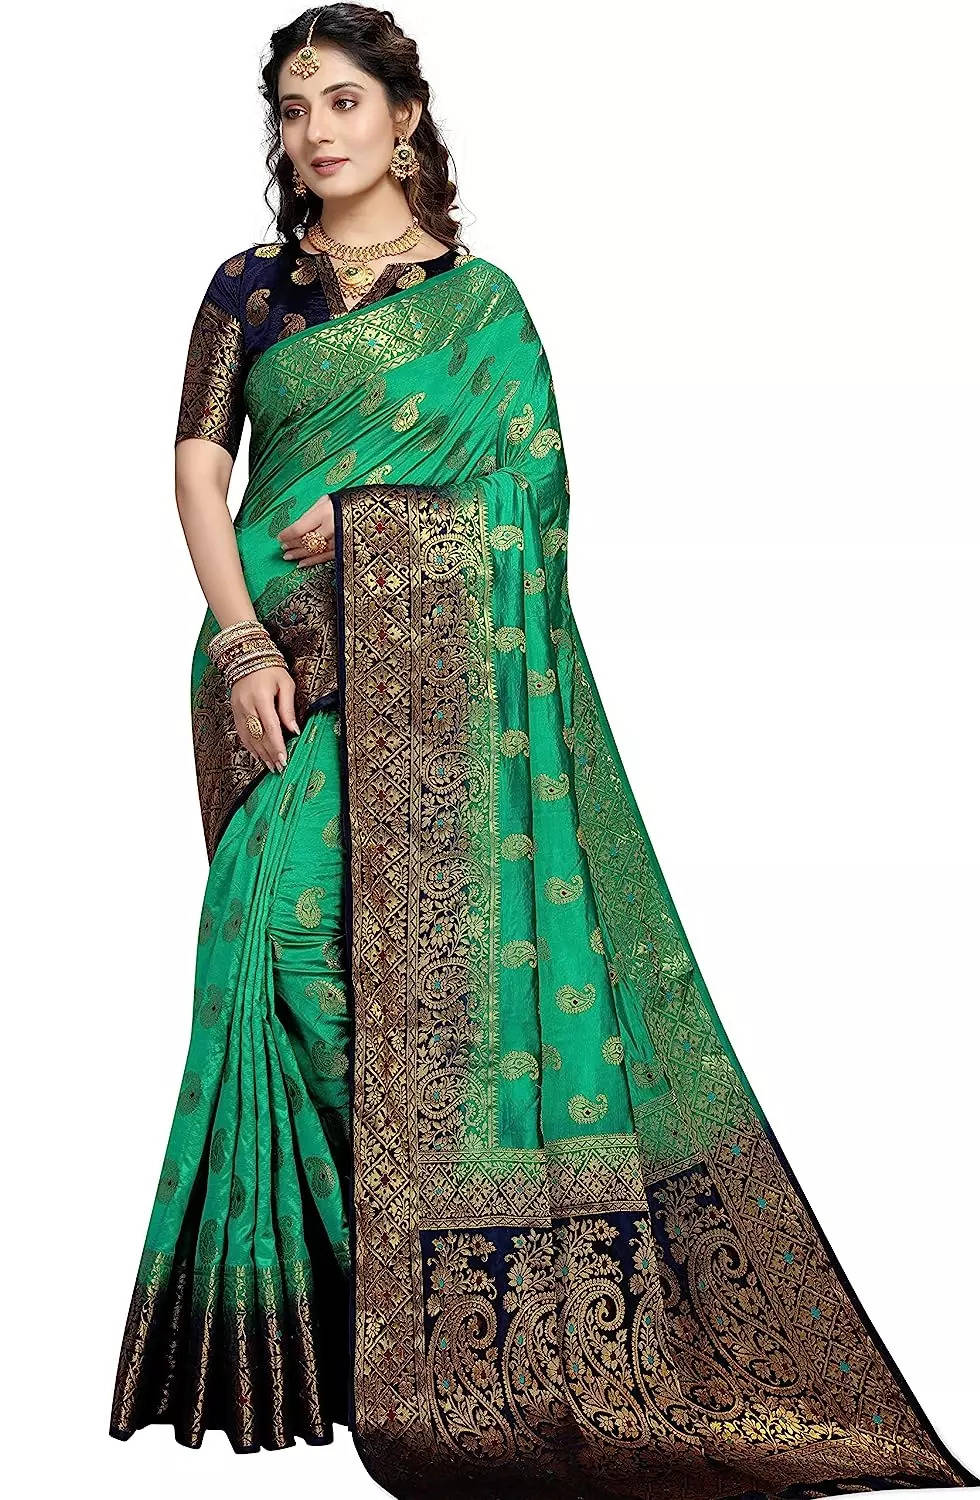 Women's Banarasi Style Pure Kanjivaram Silk Jacquard Kanchipuram Pattu Saree  With Un-Stiched Blouse at Rs 559 | Ladies Saree in Surat | ID: 2851672311791